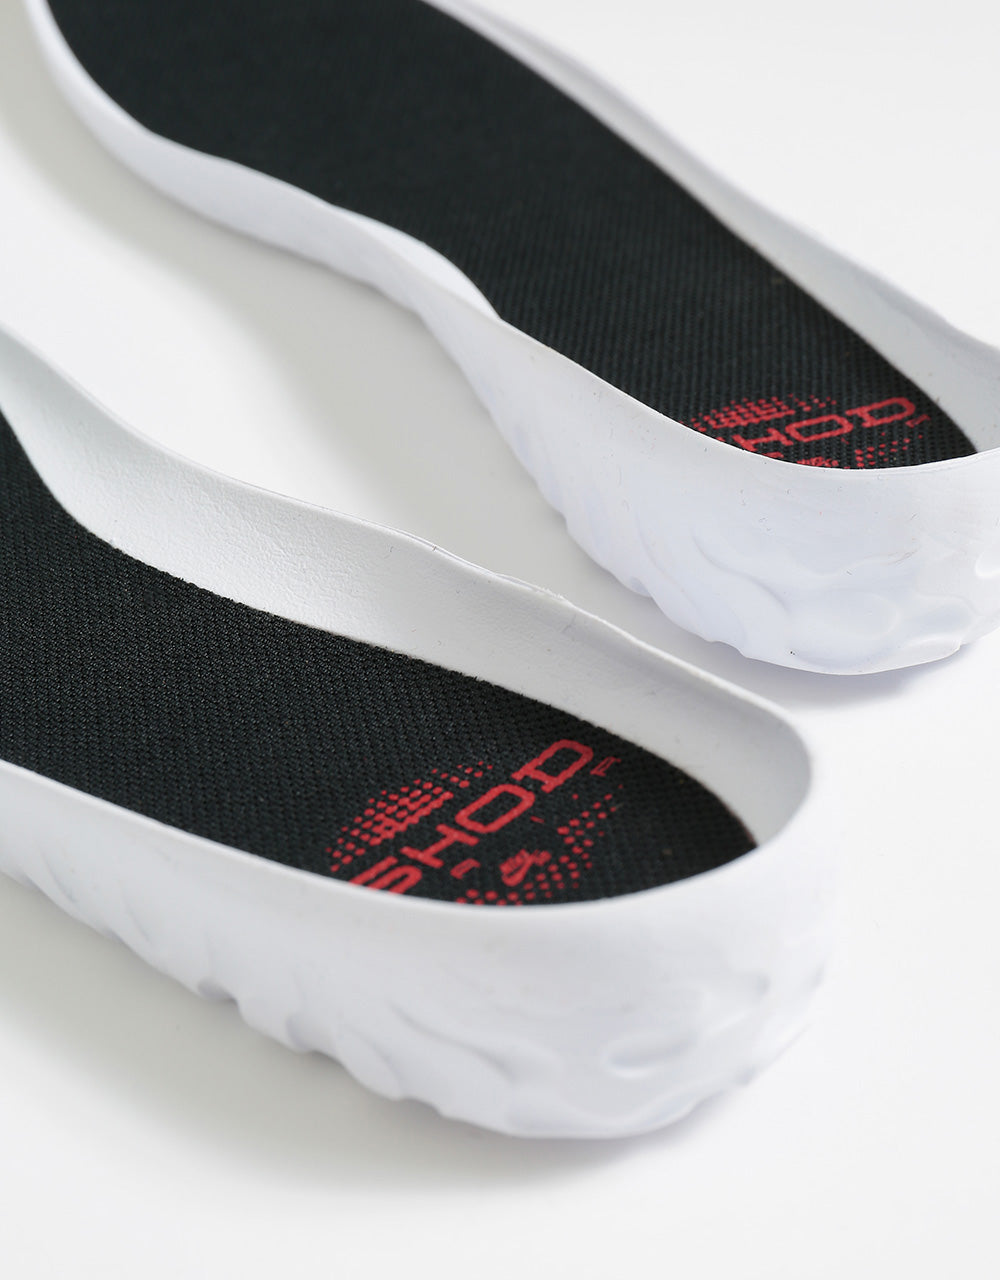 Nike SB Ishod Skate Shoes - Light Olive/Black-Light Olive